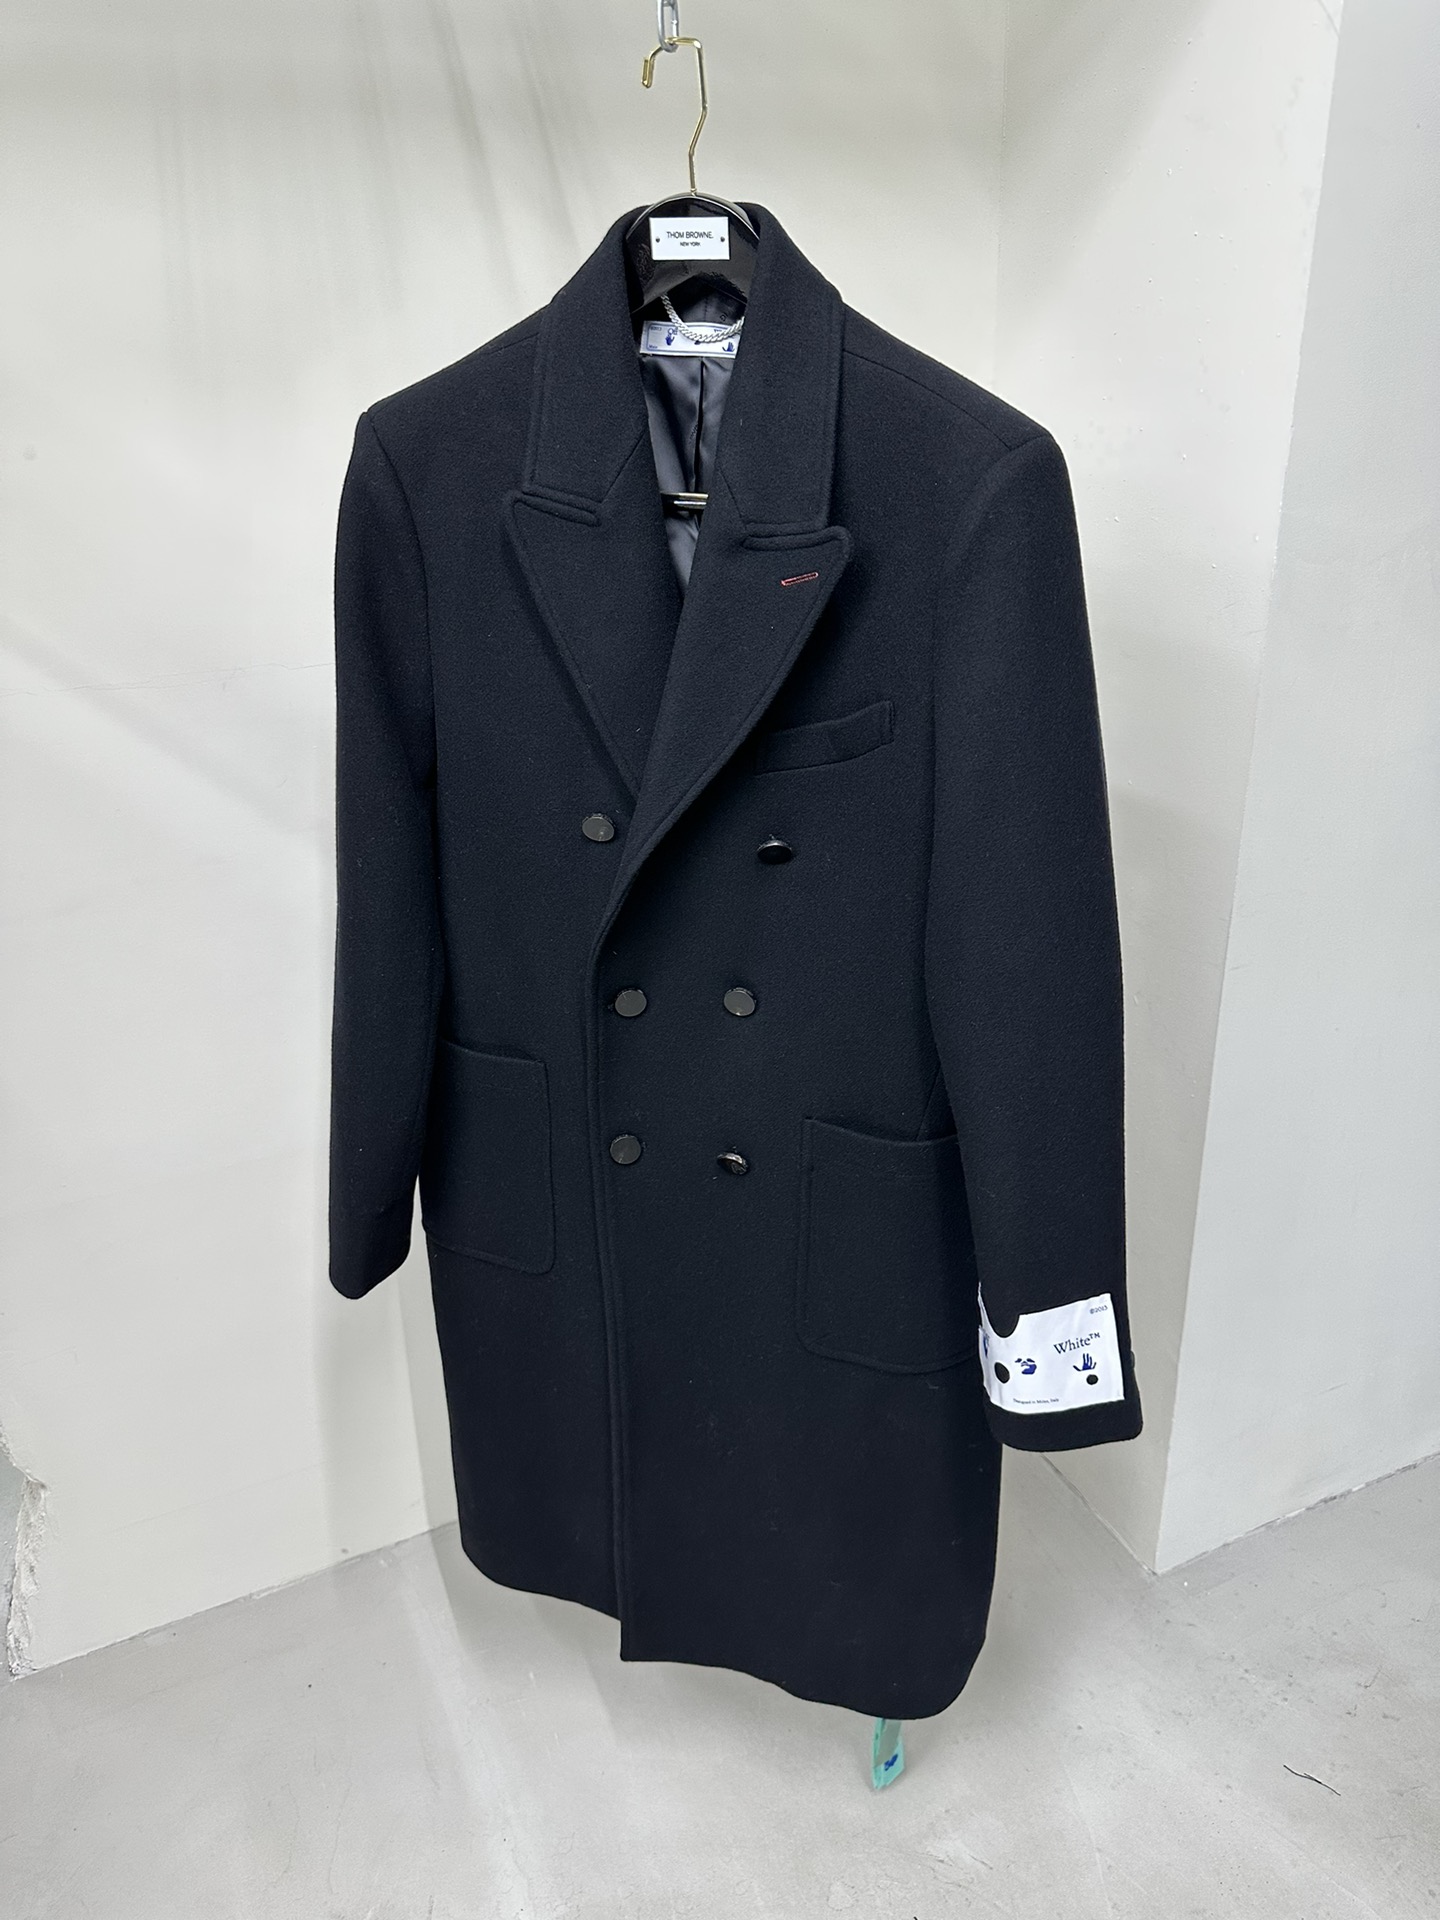 Off-White Clothing Coats & Jackets Highest quality replica
 Black White Printing Wool Fashion